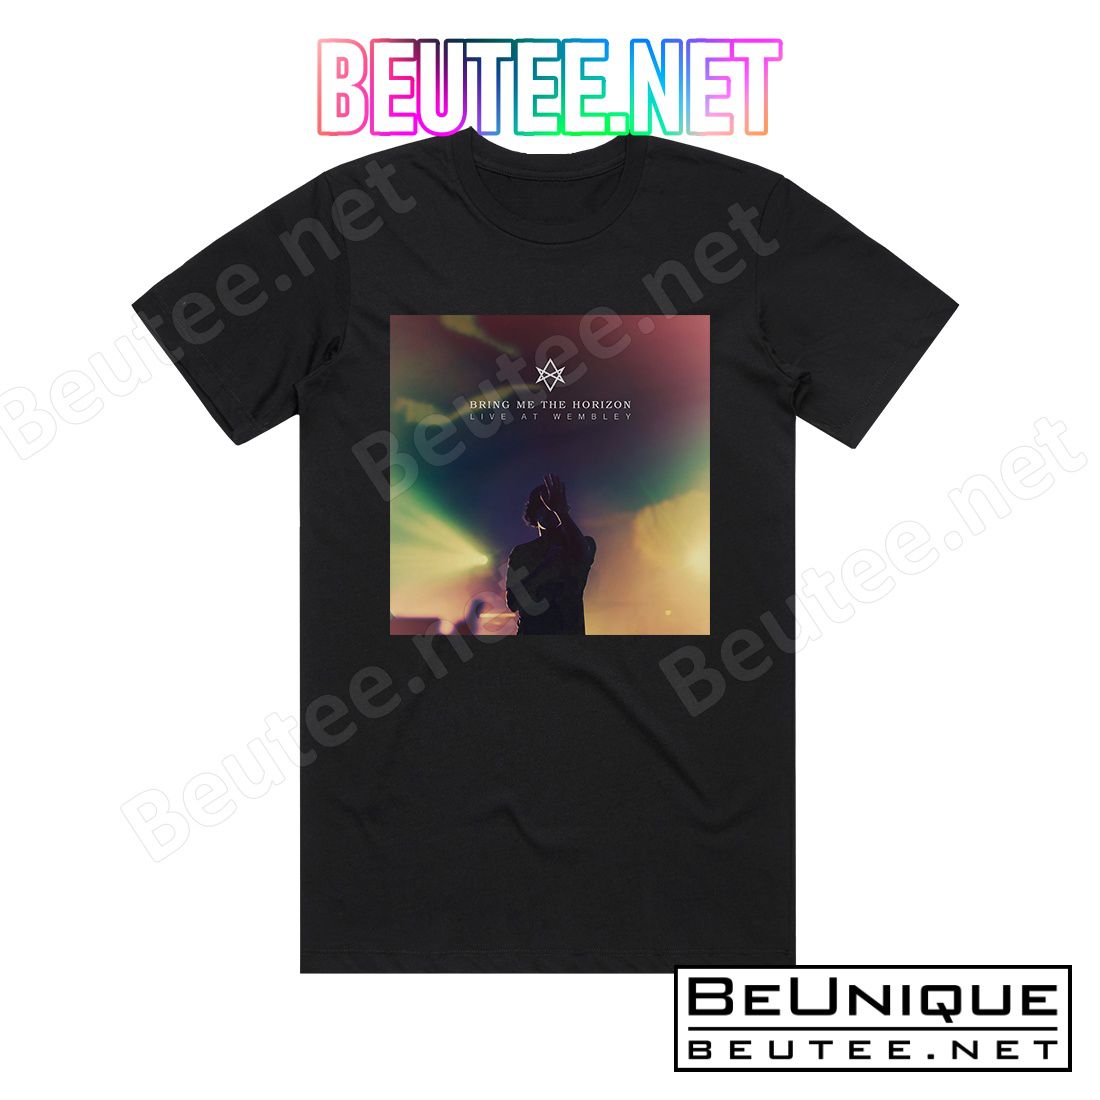 Bring Me the Horizon Live At Wembley Album Cover T-Shirt